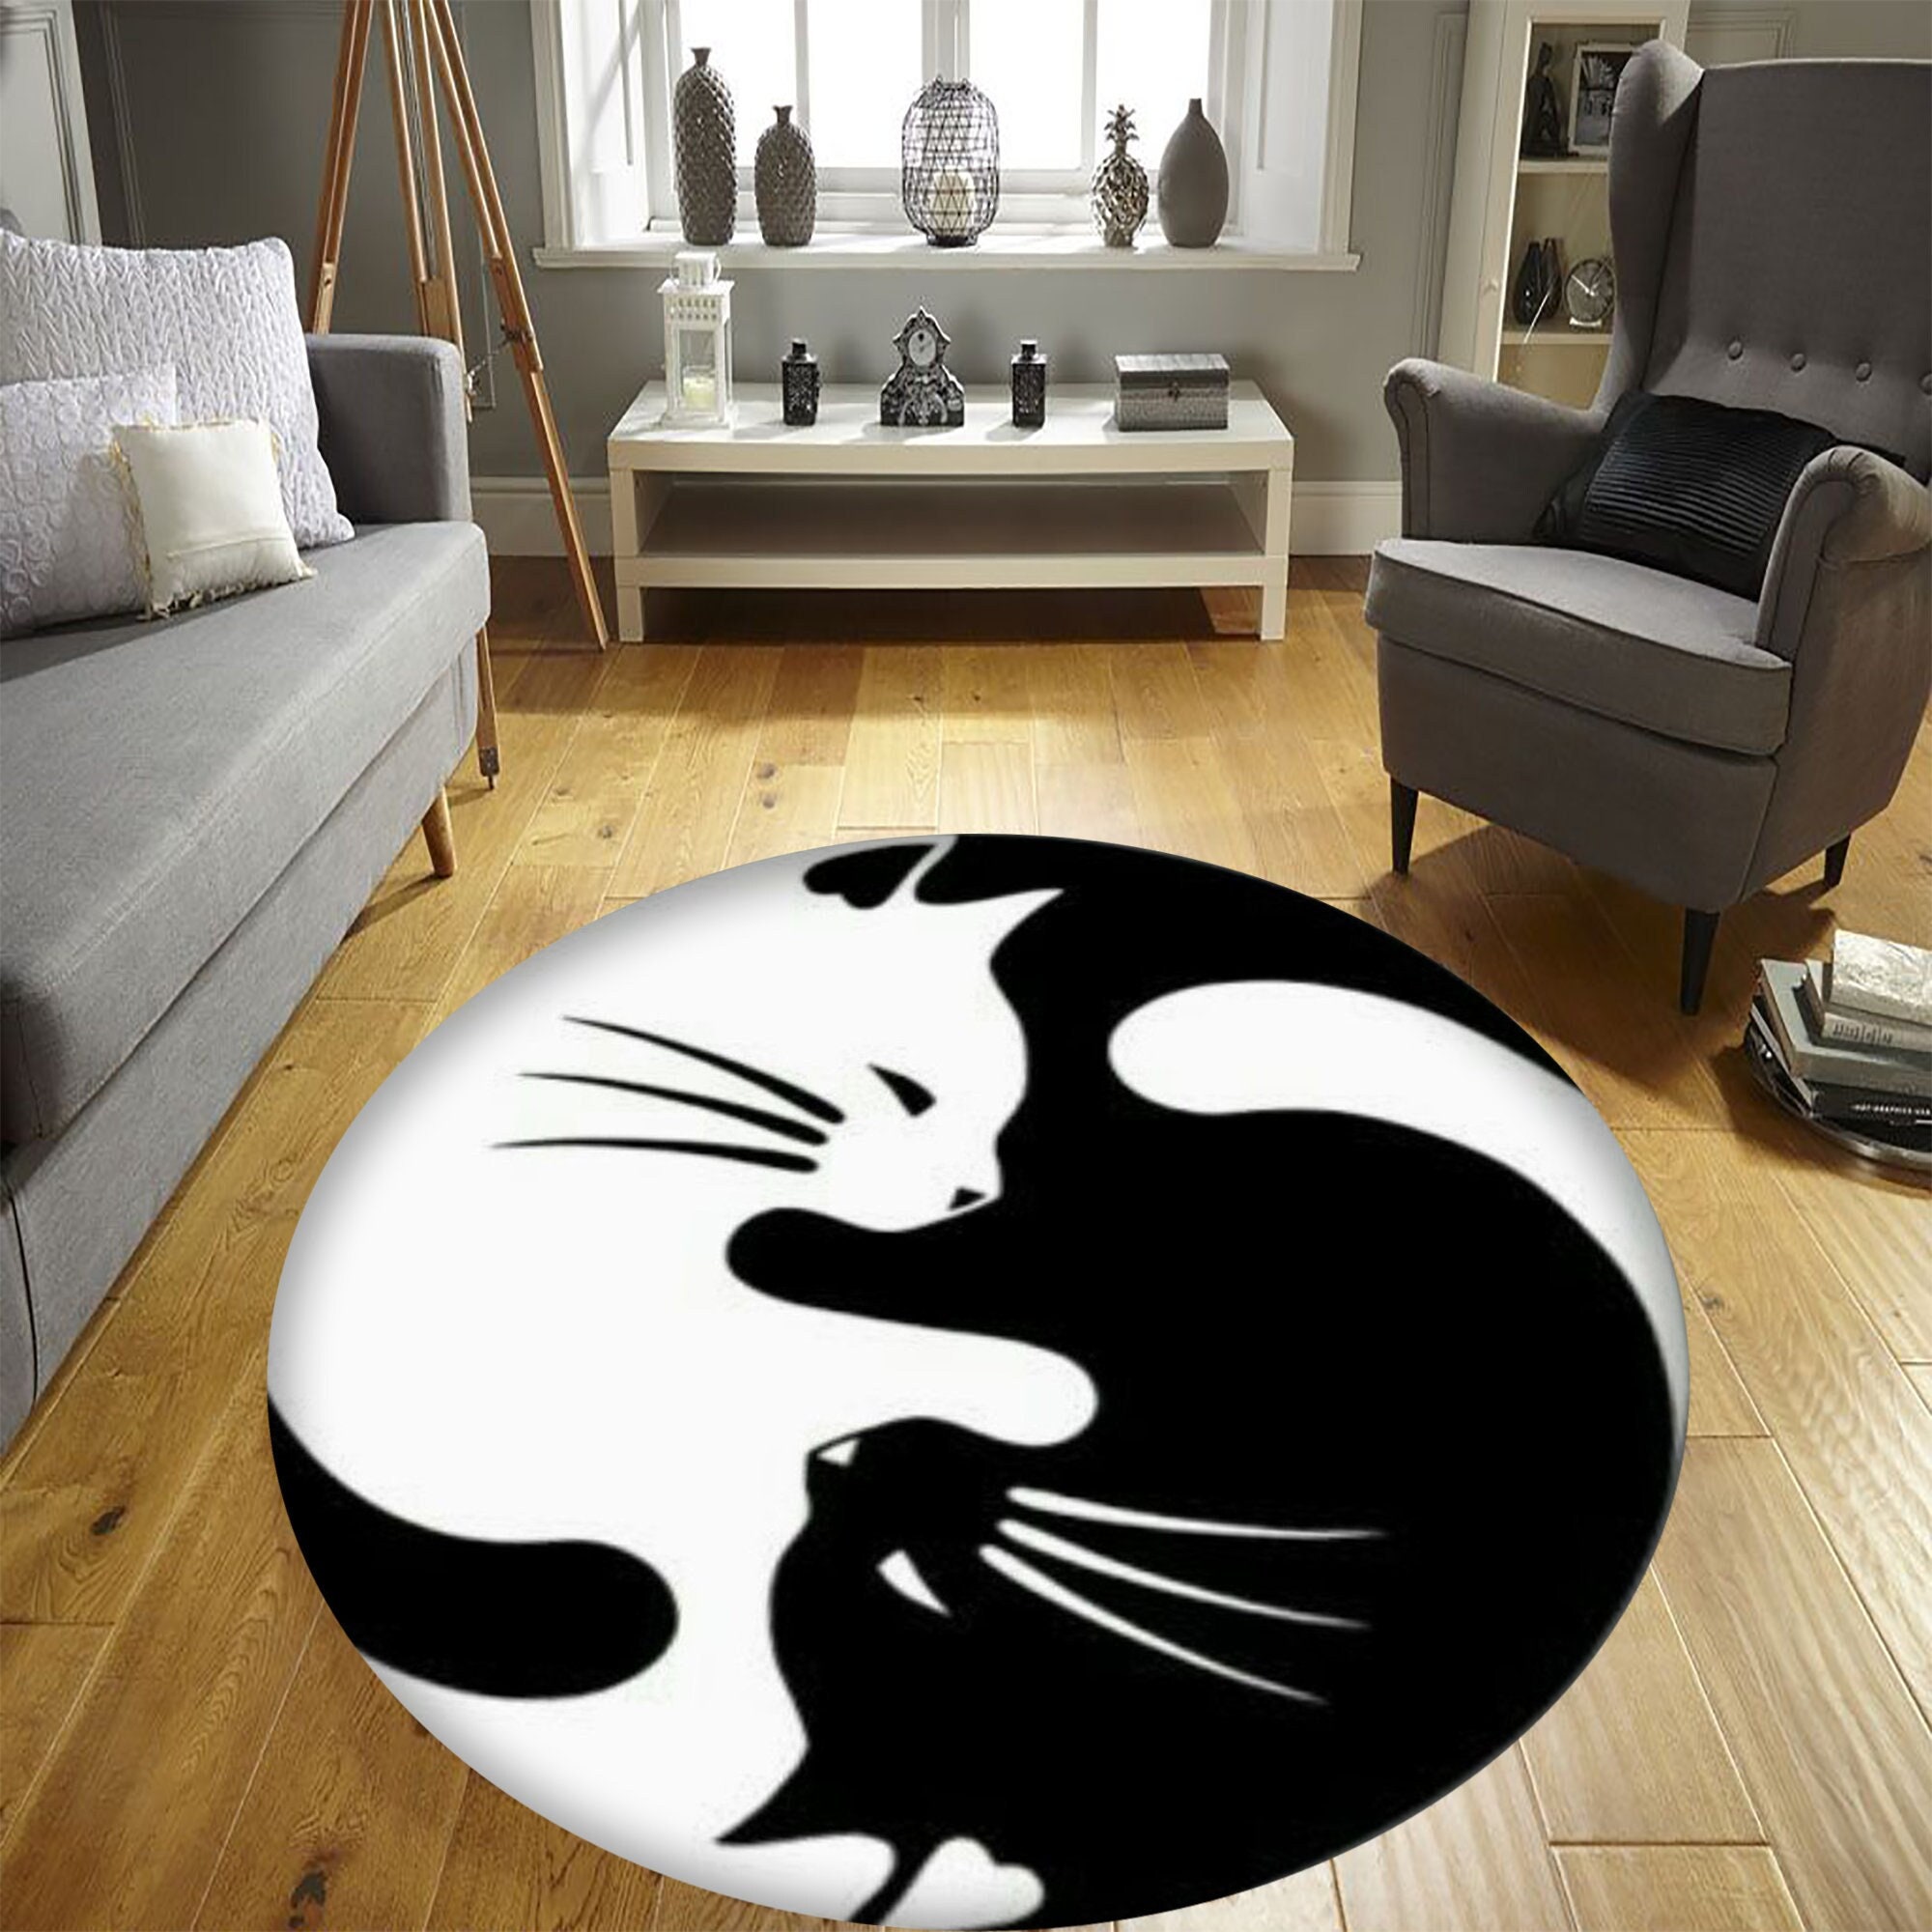 Funny calico cat rug for bedside